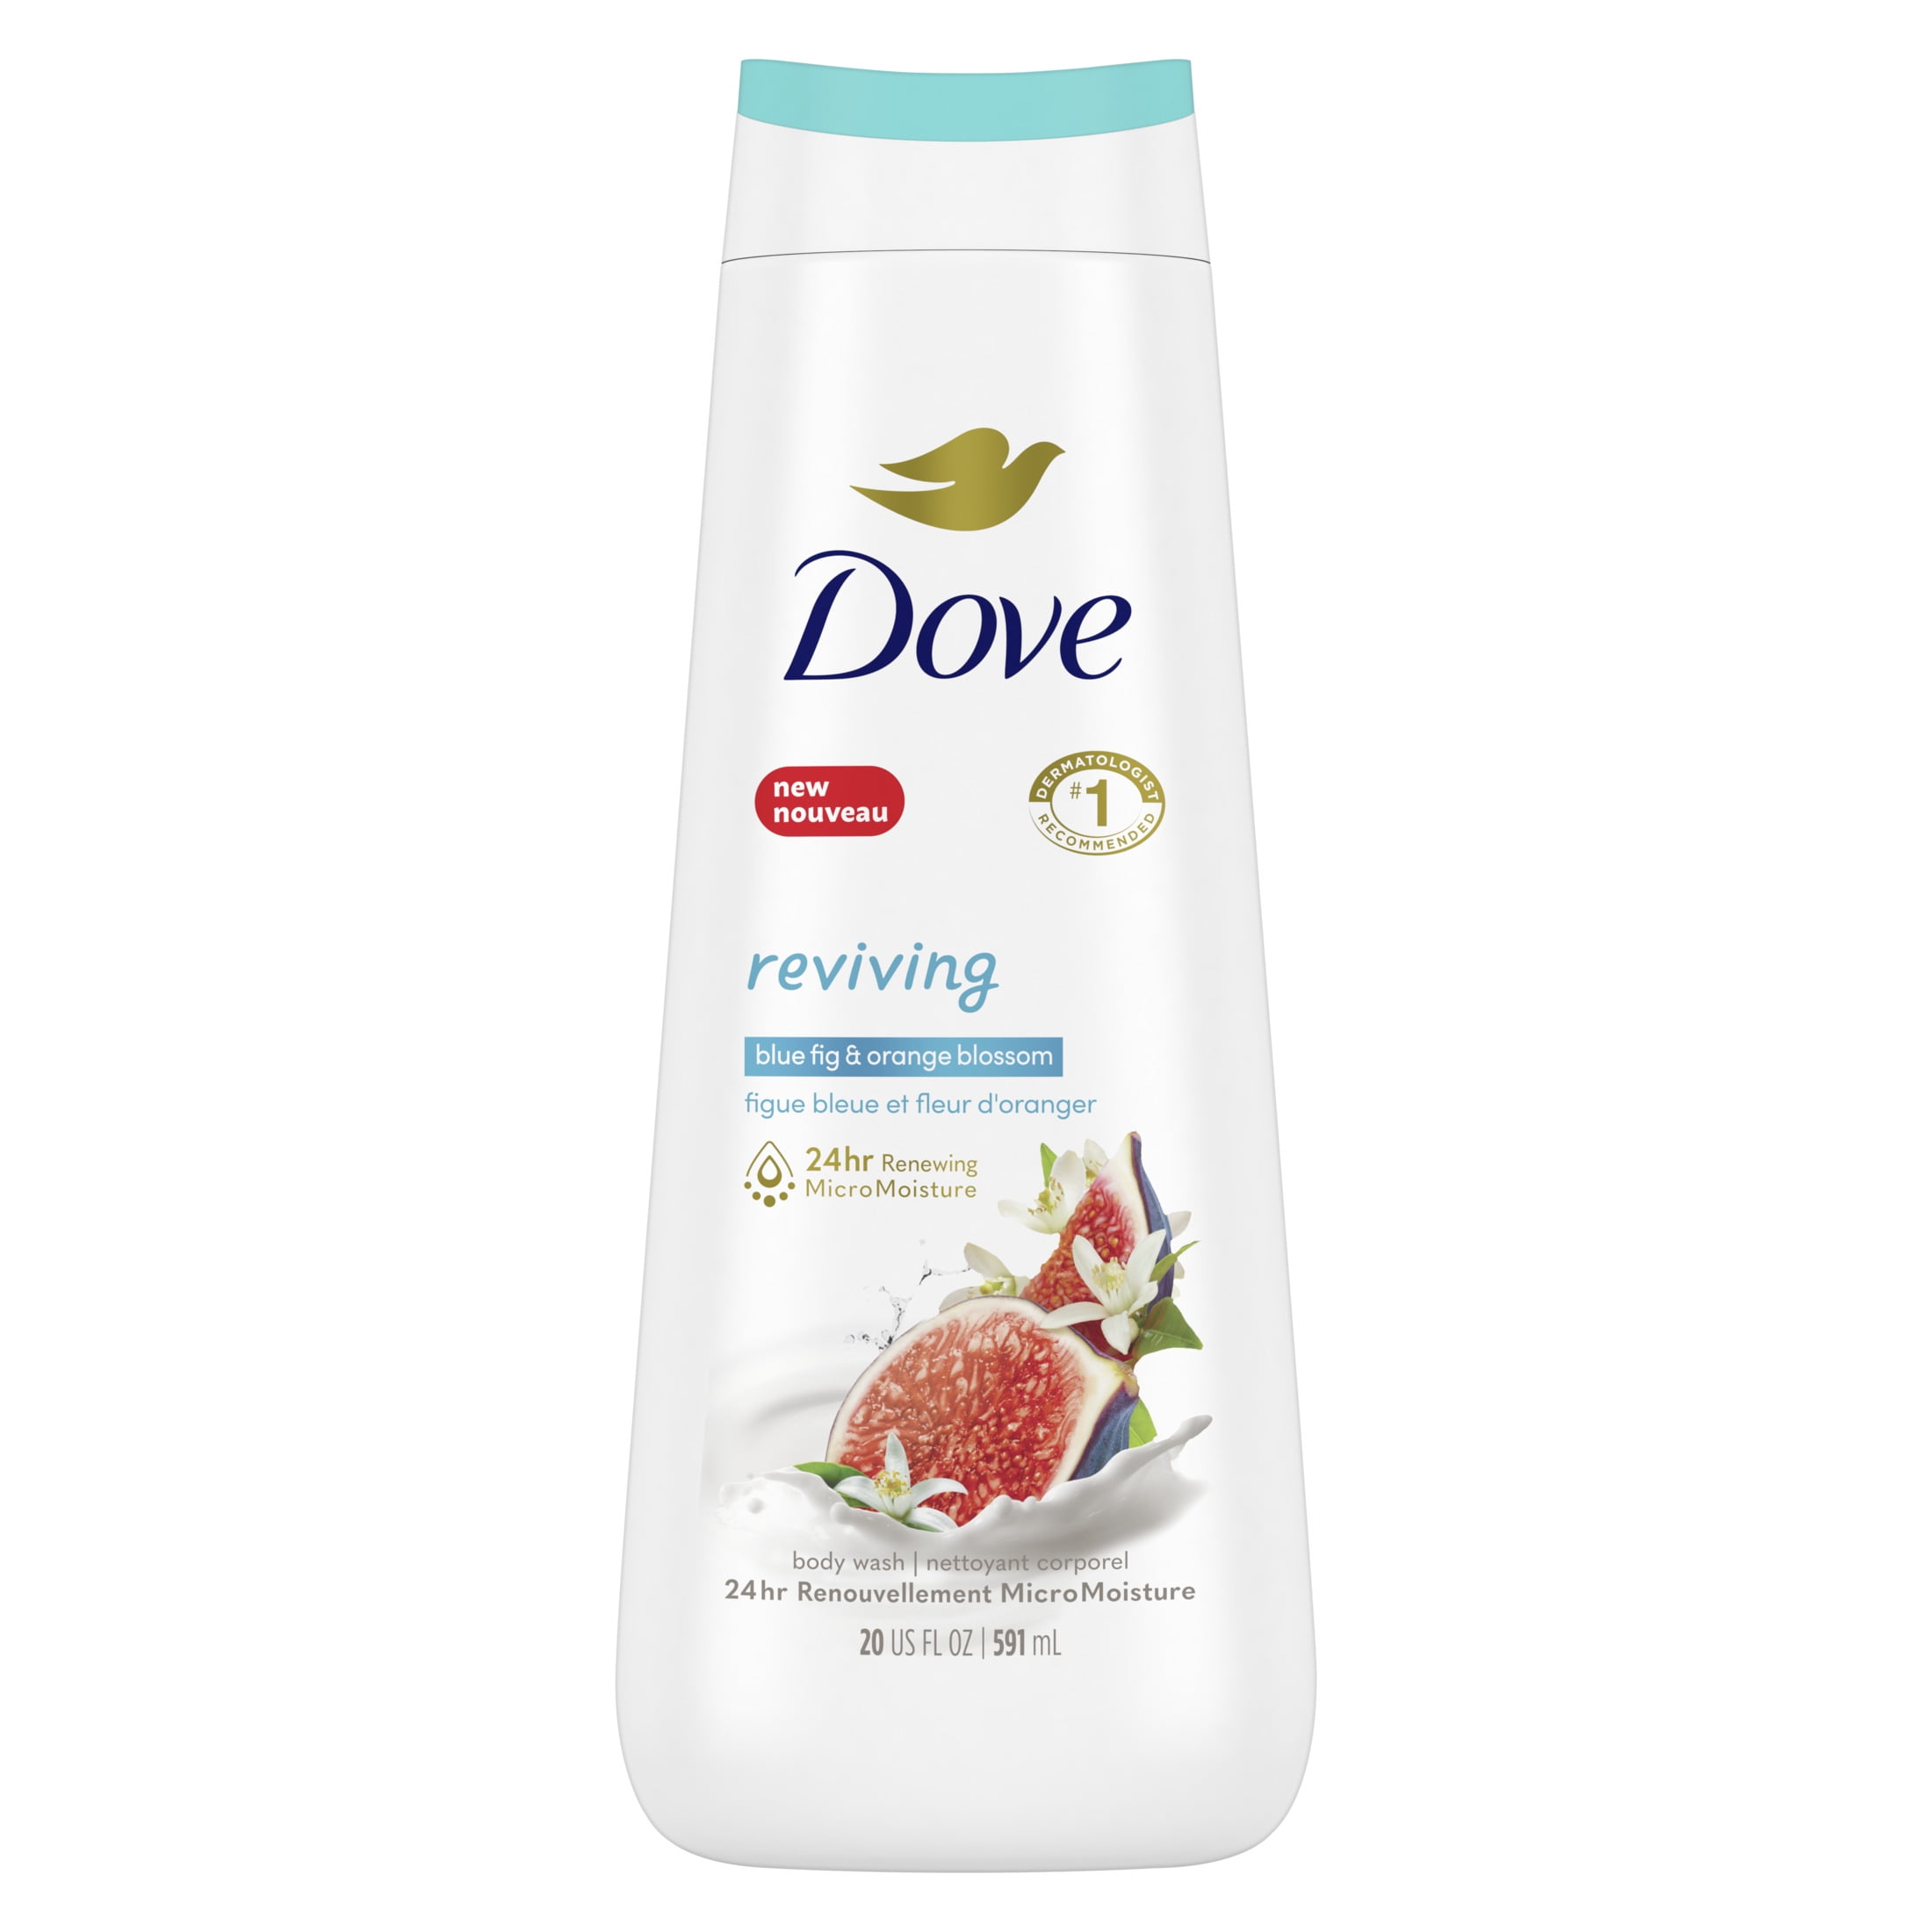 Dove Reviving Blue Fig and Orange Blossom Body Wash, 20 oz